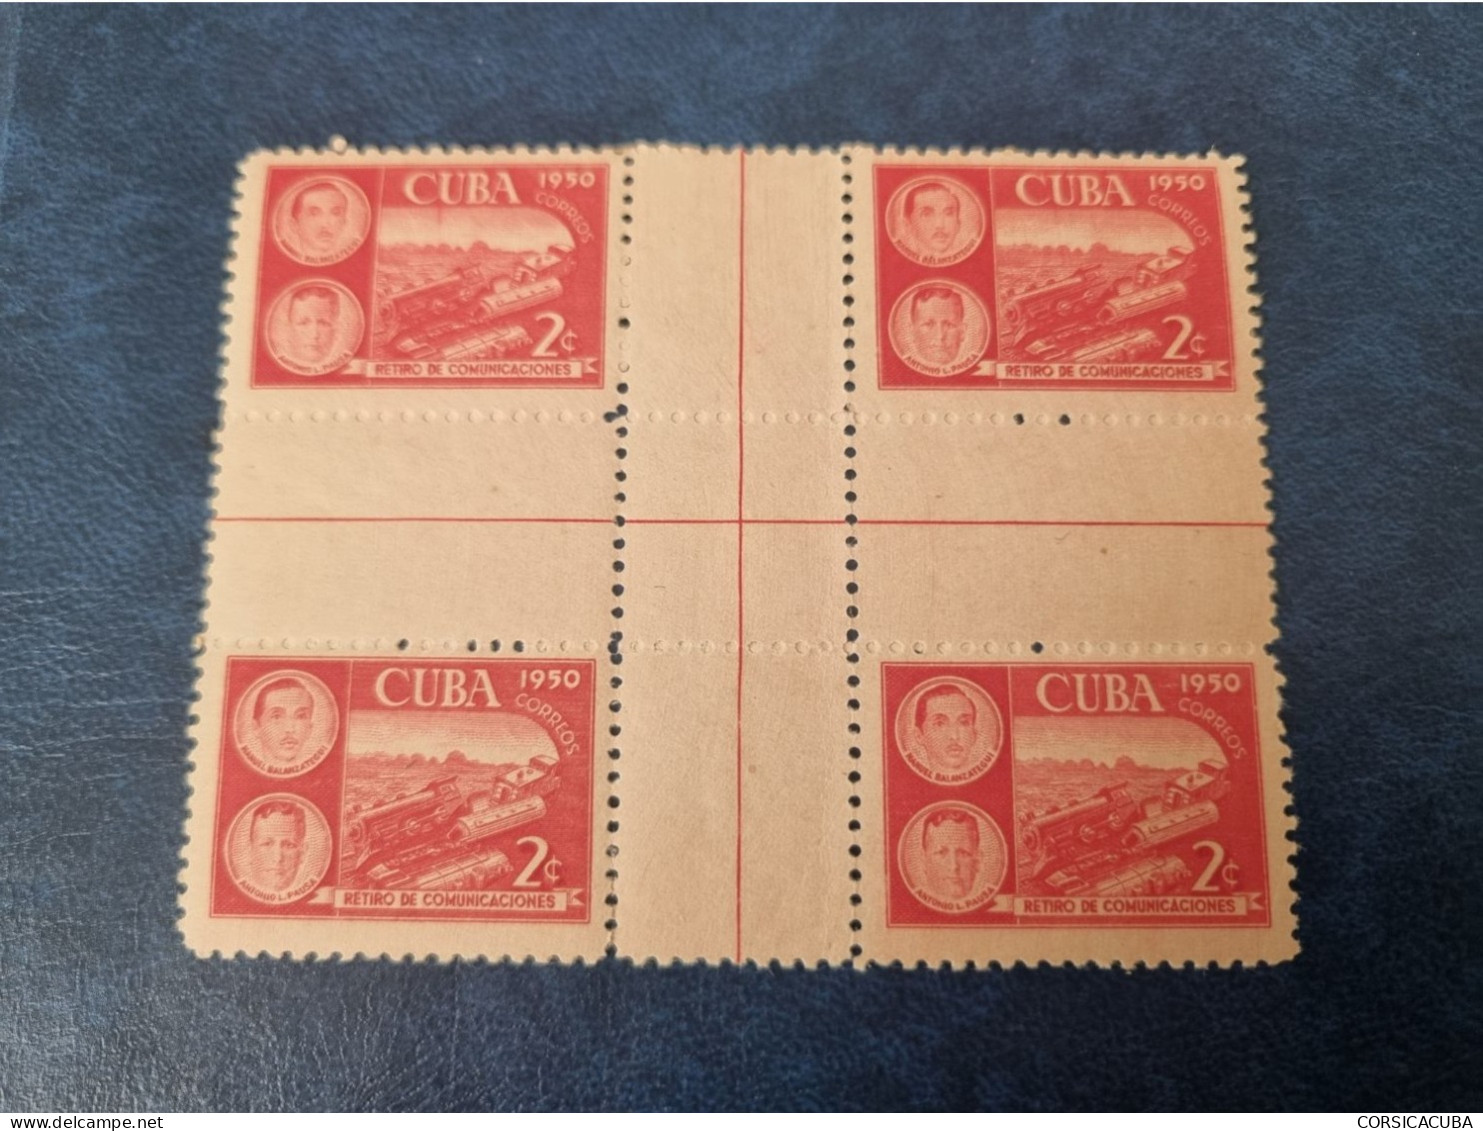 CUBA  NEUF  1950   RETIRO  DE  COMUNICACIONES  //  PARFAIT  ETAT  //  1er  CHOIX  // Centros De Hoja - Neufs